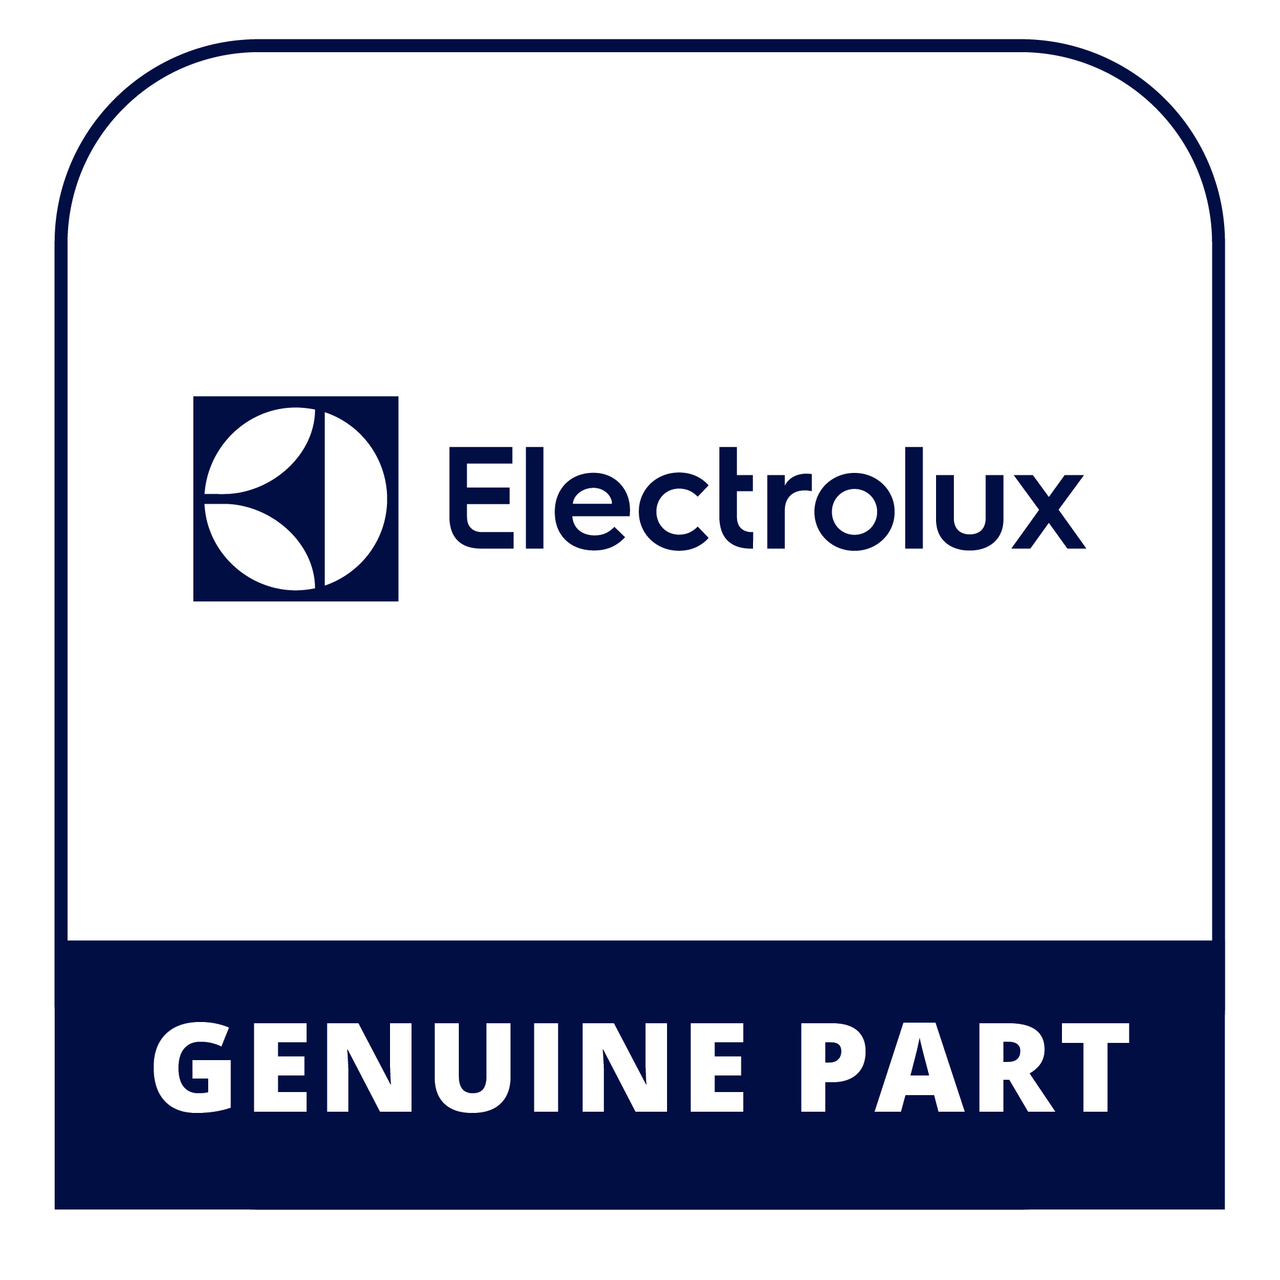 Frigidaire - Electrolux 5304493696 Sheet - Genuine Electrolux Part